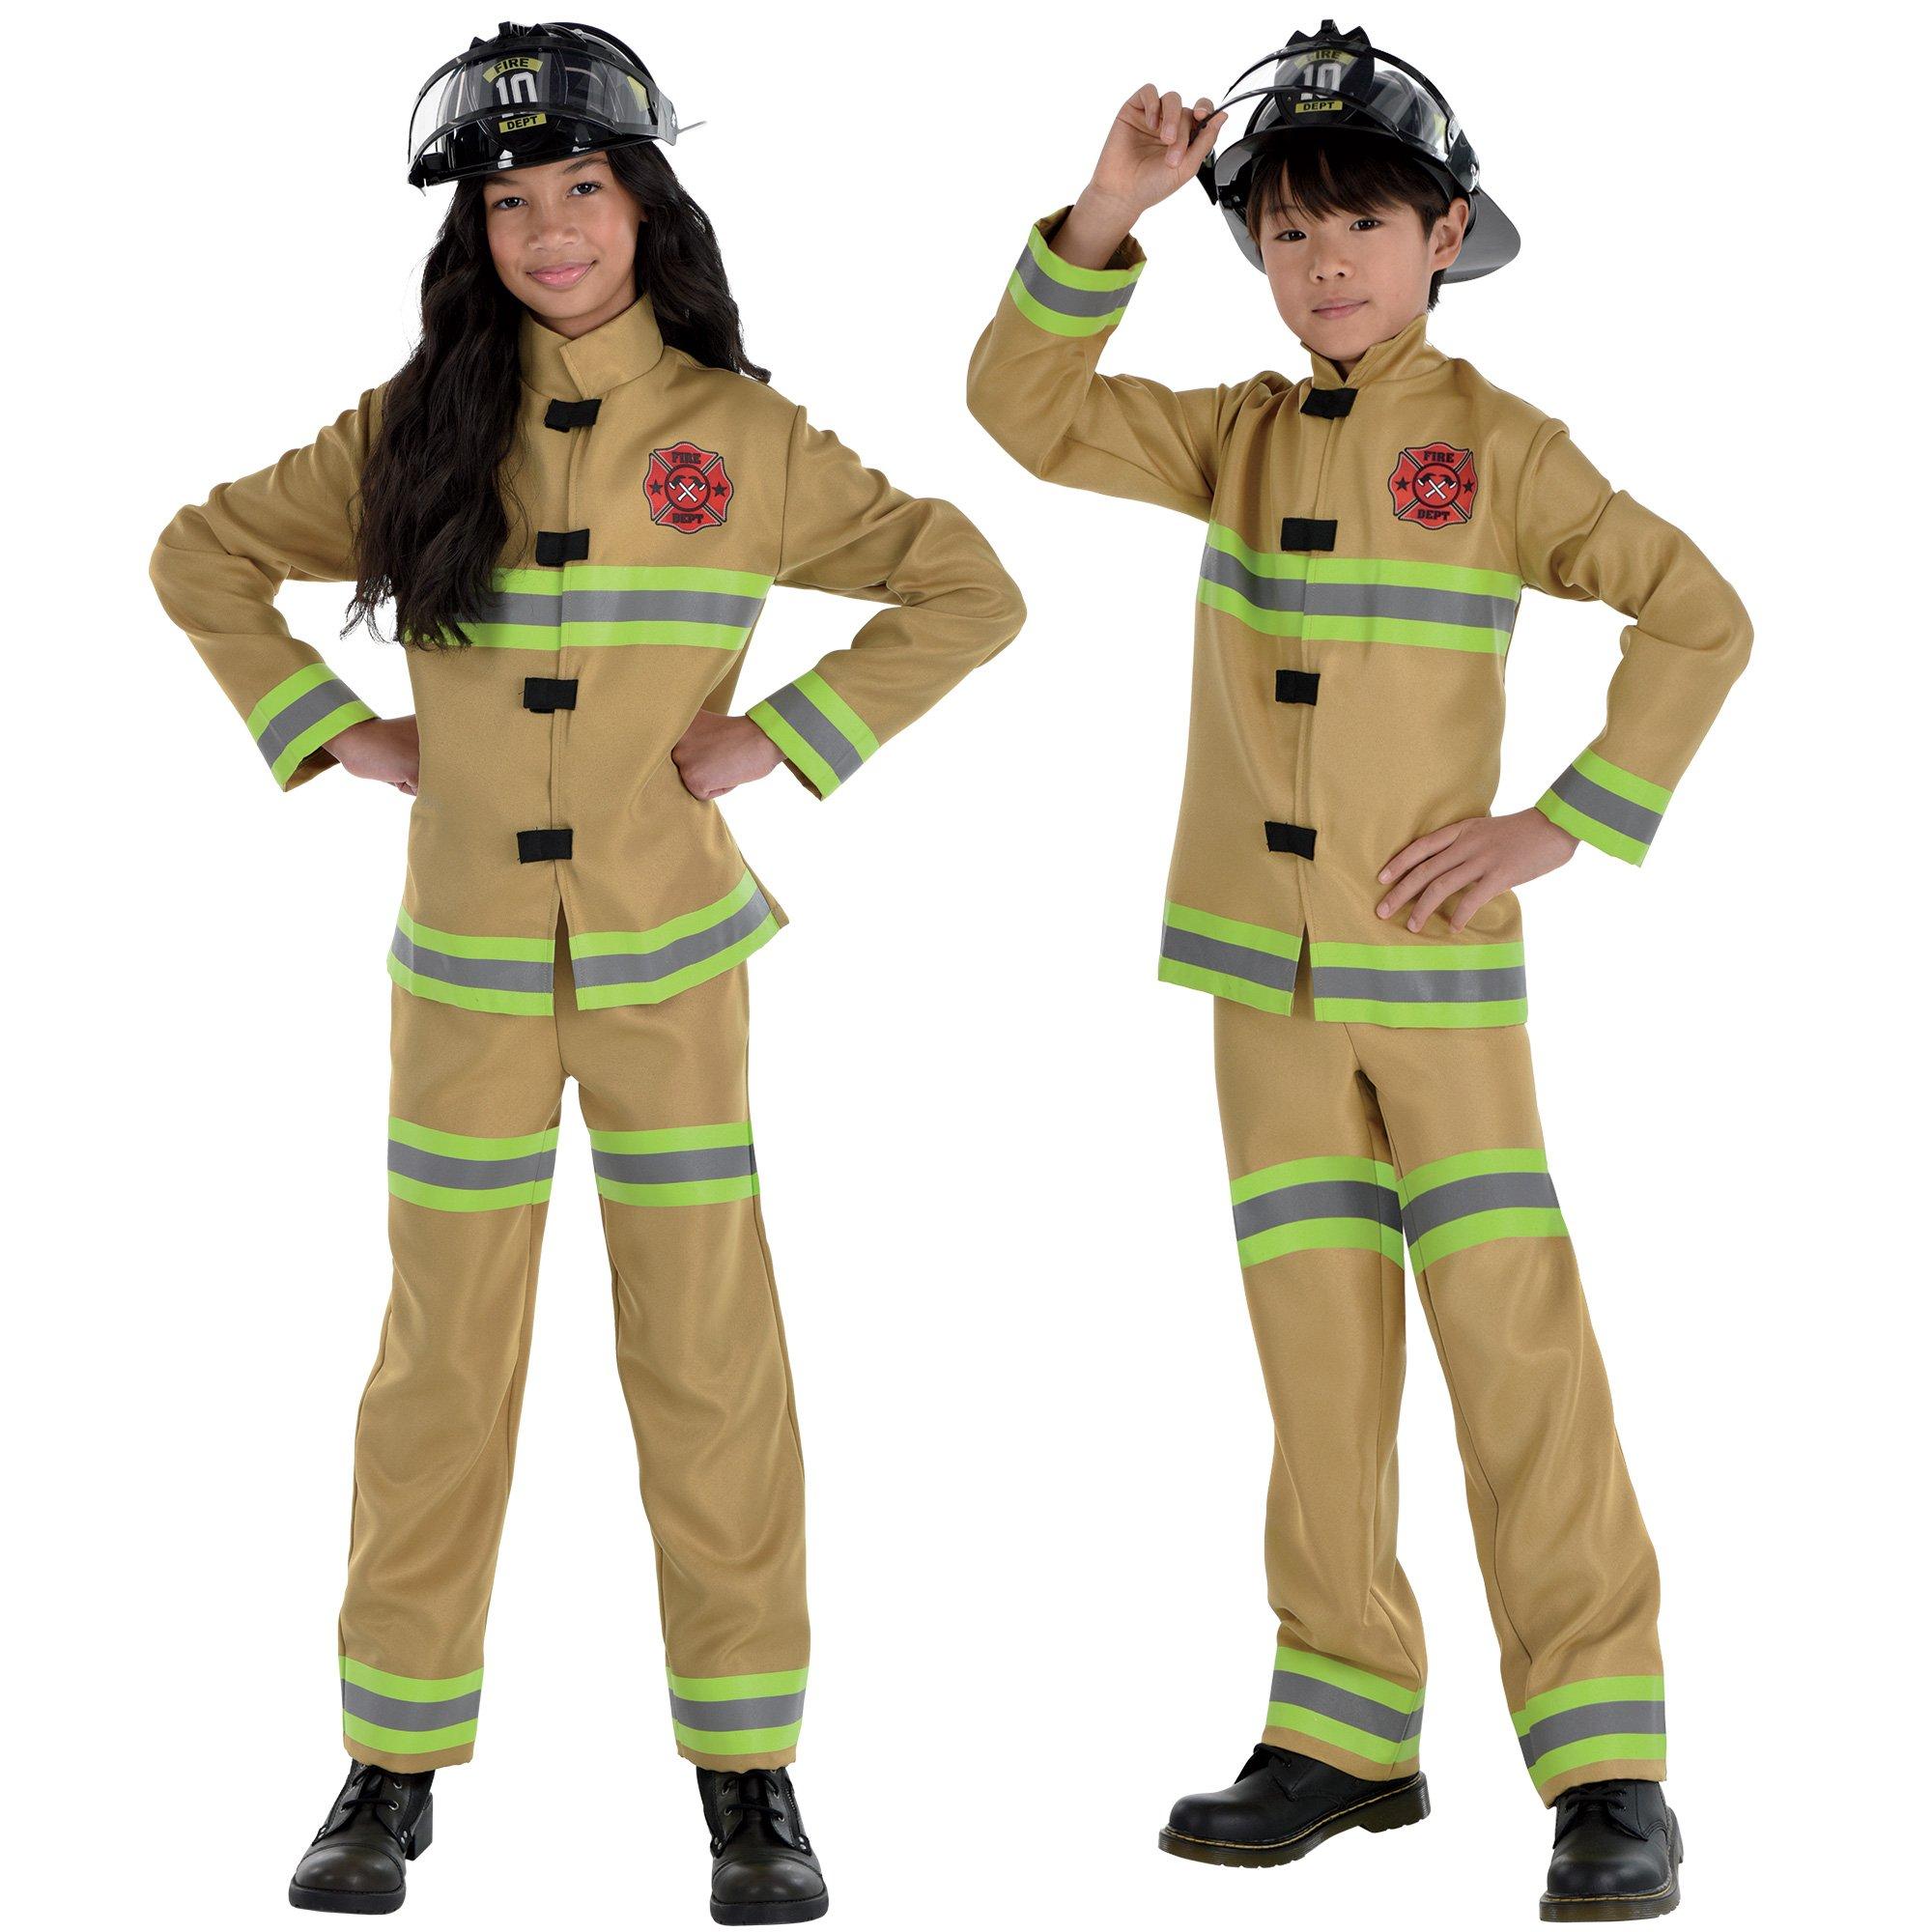 Kids' Firefighter Costume